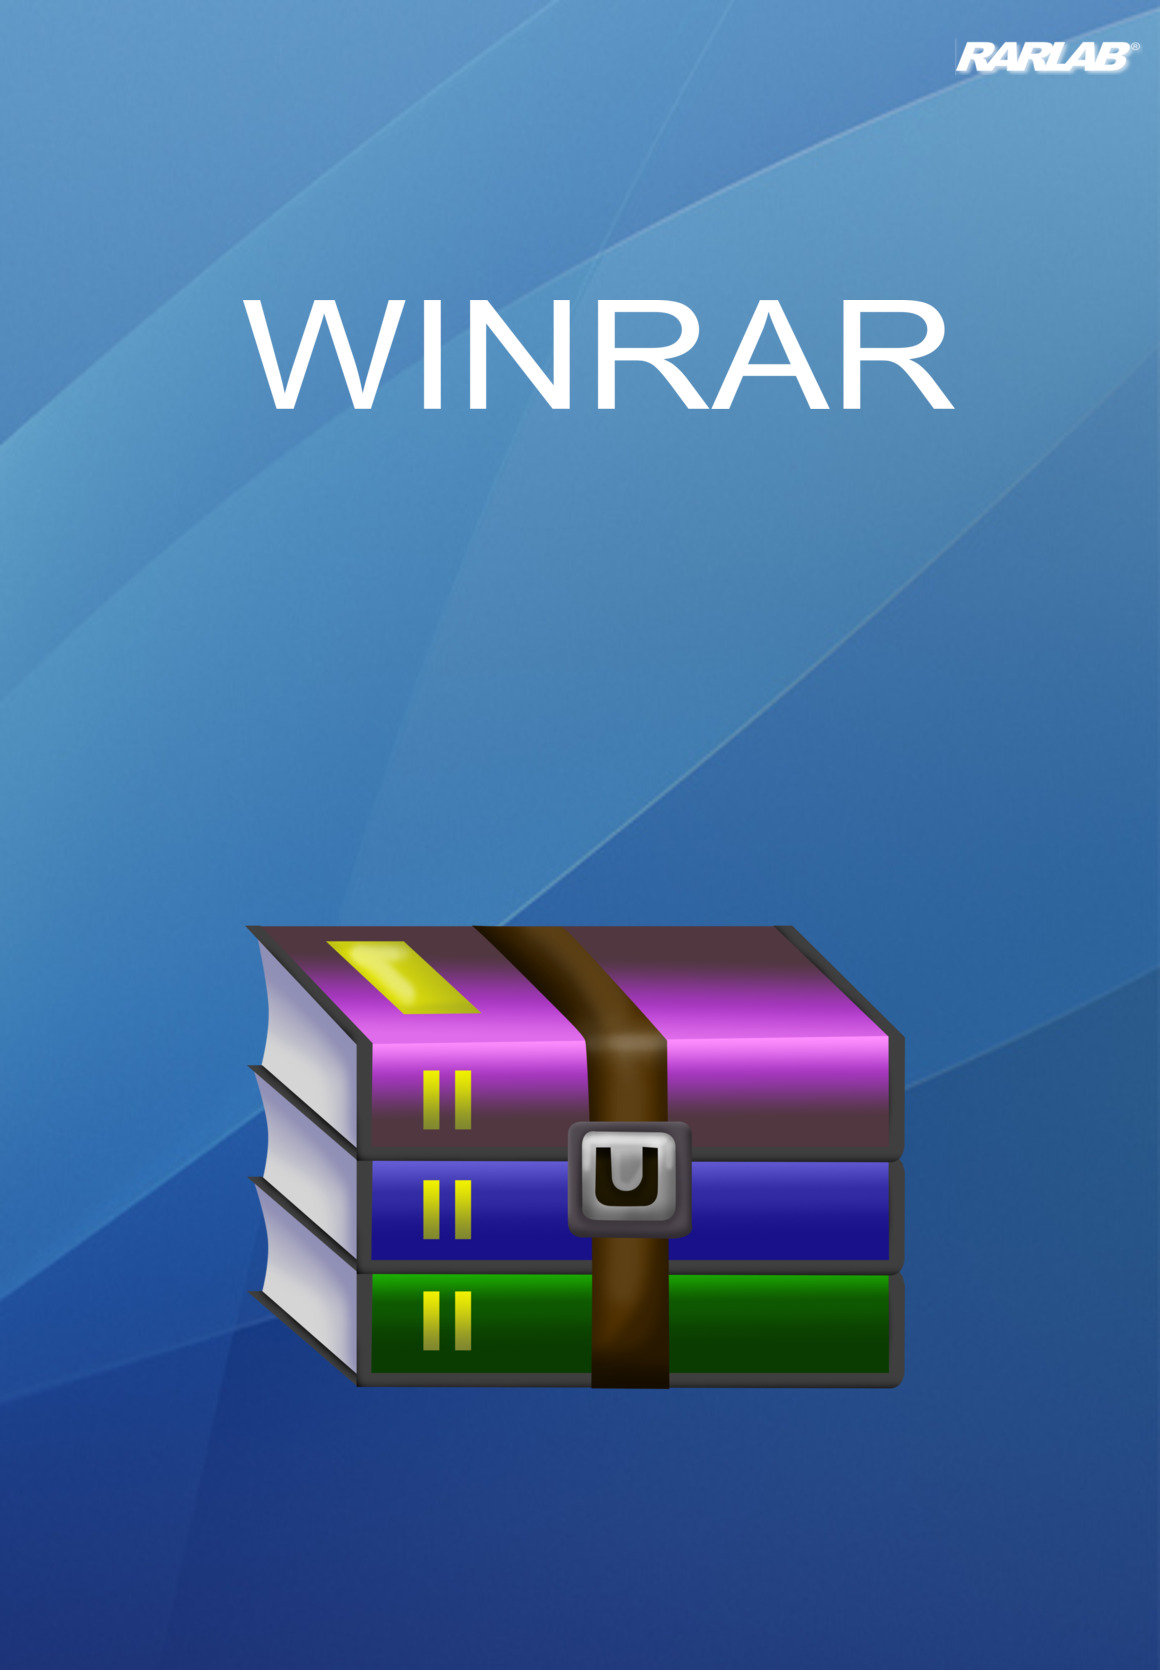 Системный архиватор. WINRAR. Архиватор WINRAR. Архиватор винрар. WINRAR логотип.